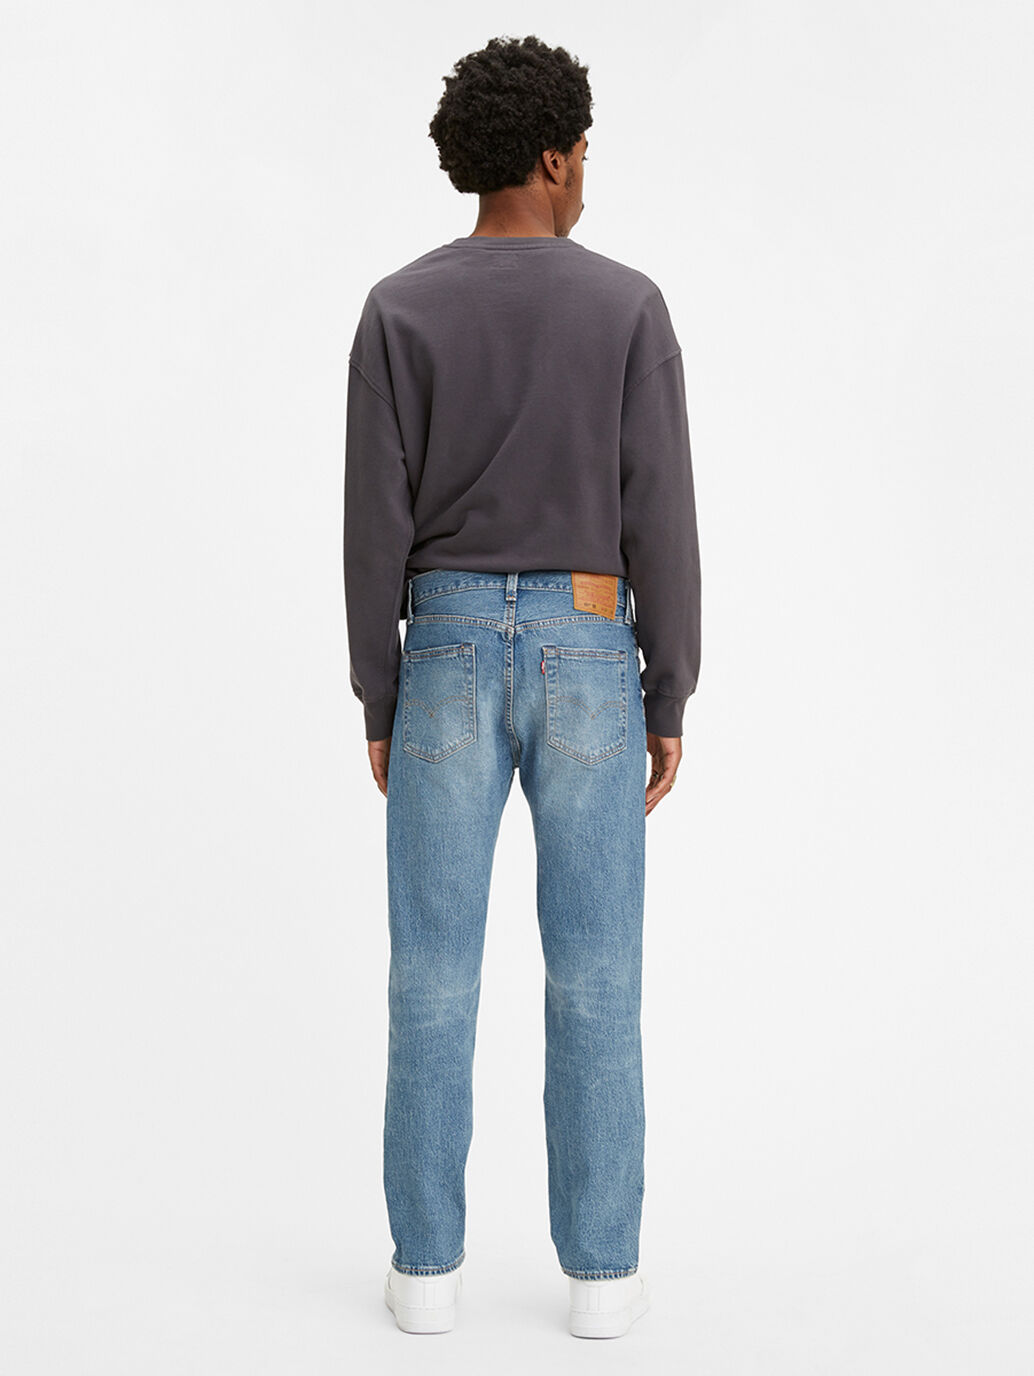 levis jeans 501 straight leg